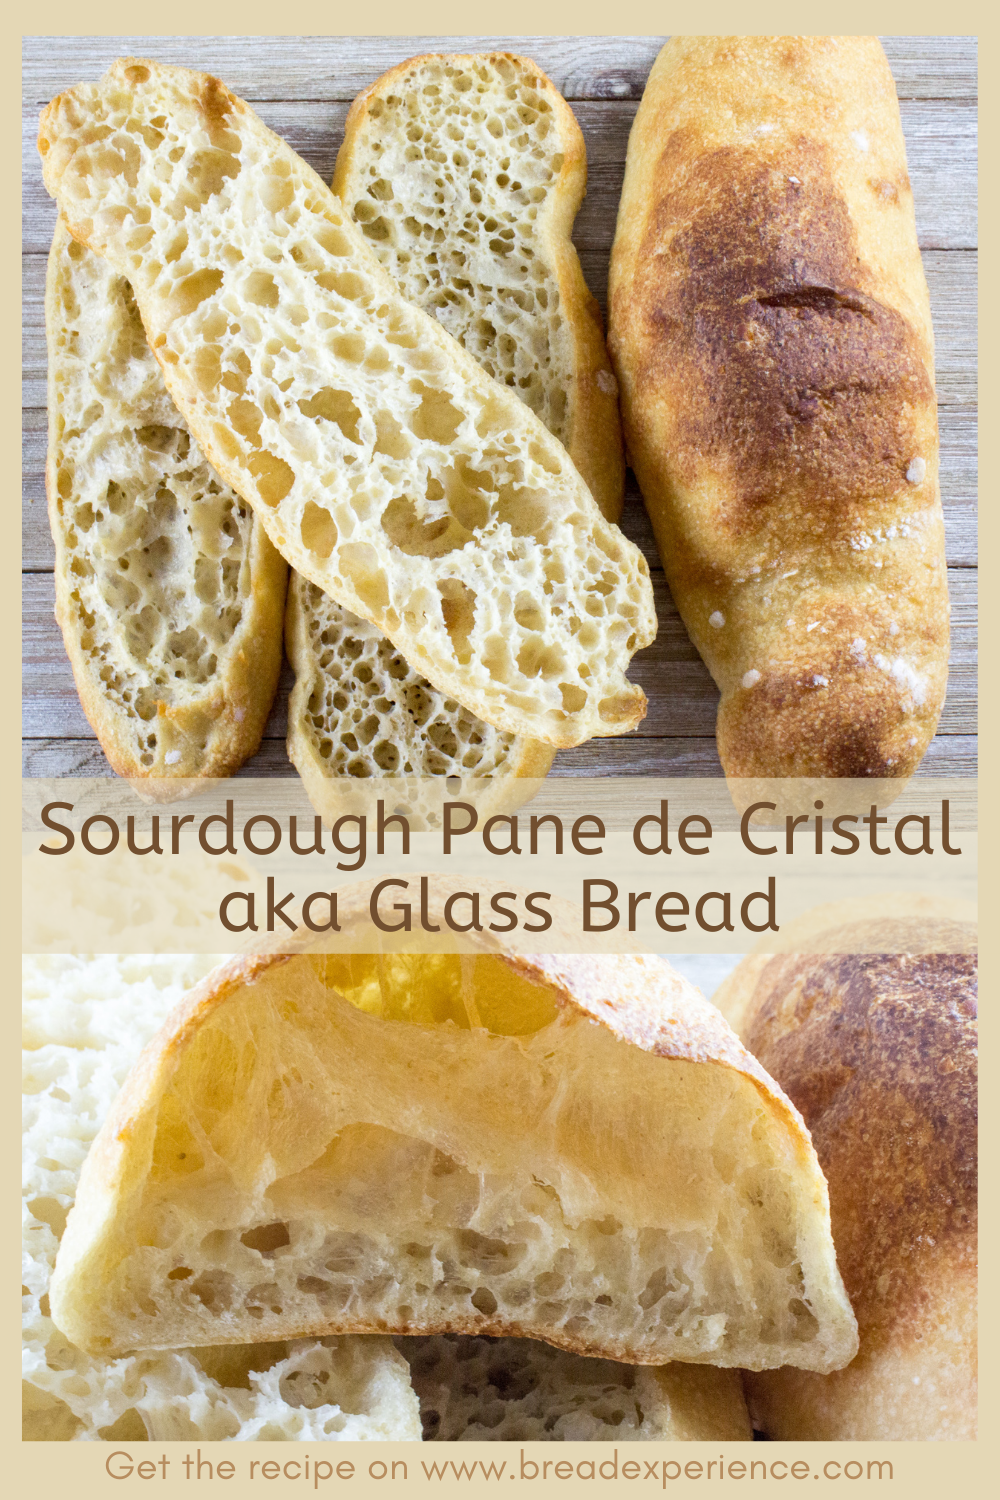 How to make Pan de Cristal with sourdough starter